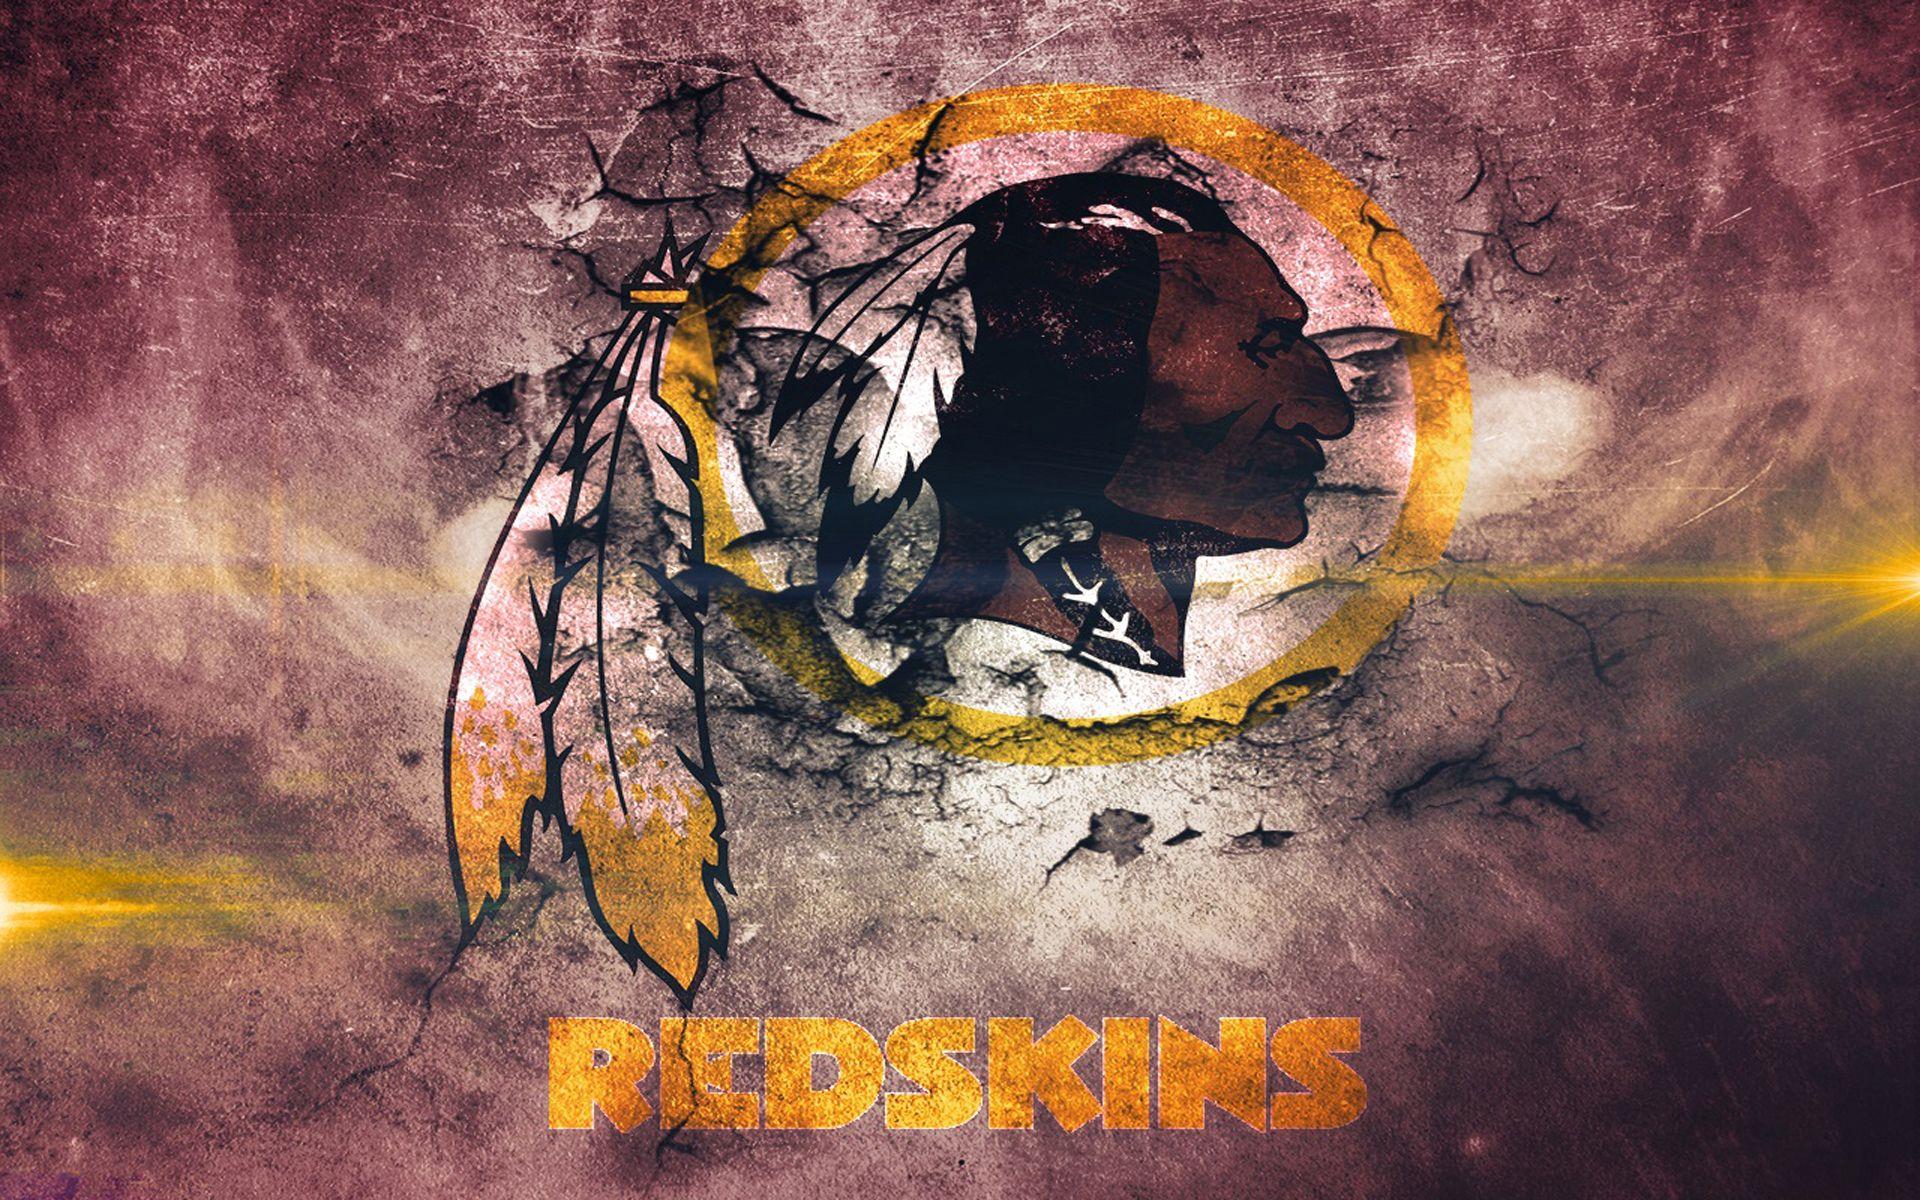 Redskins Background Free Download